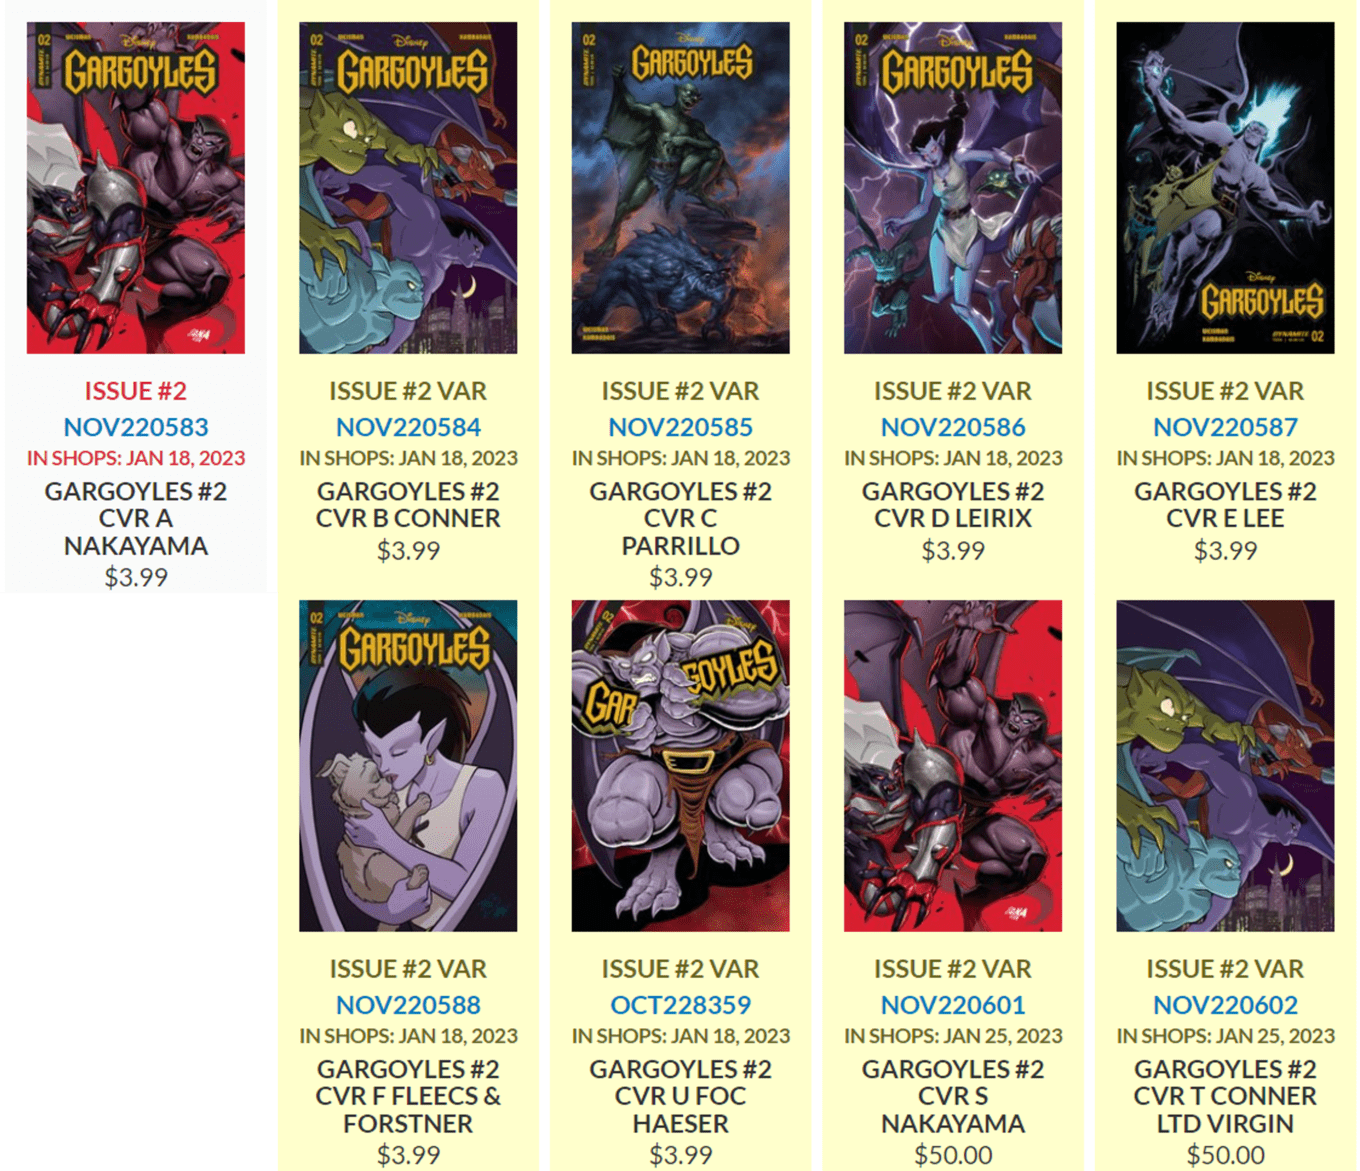 Gargoyles #2 main cover & variant covers